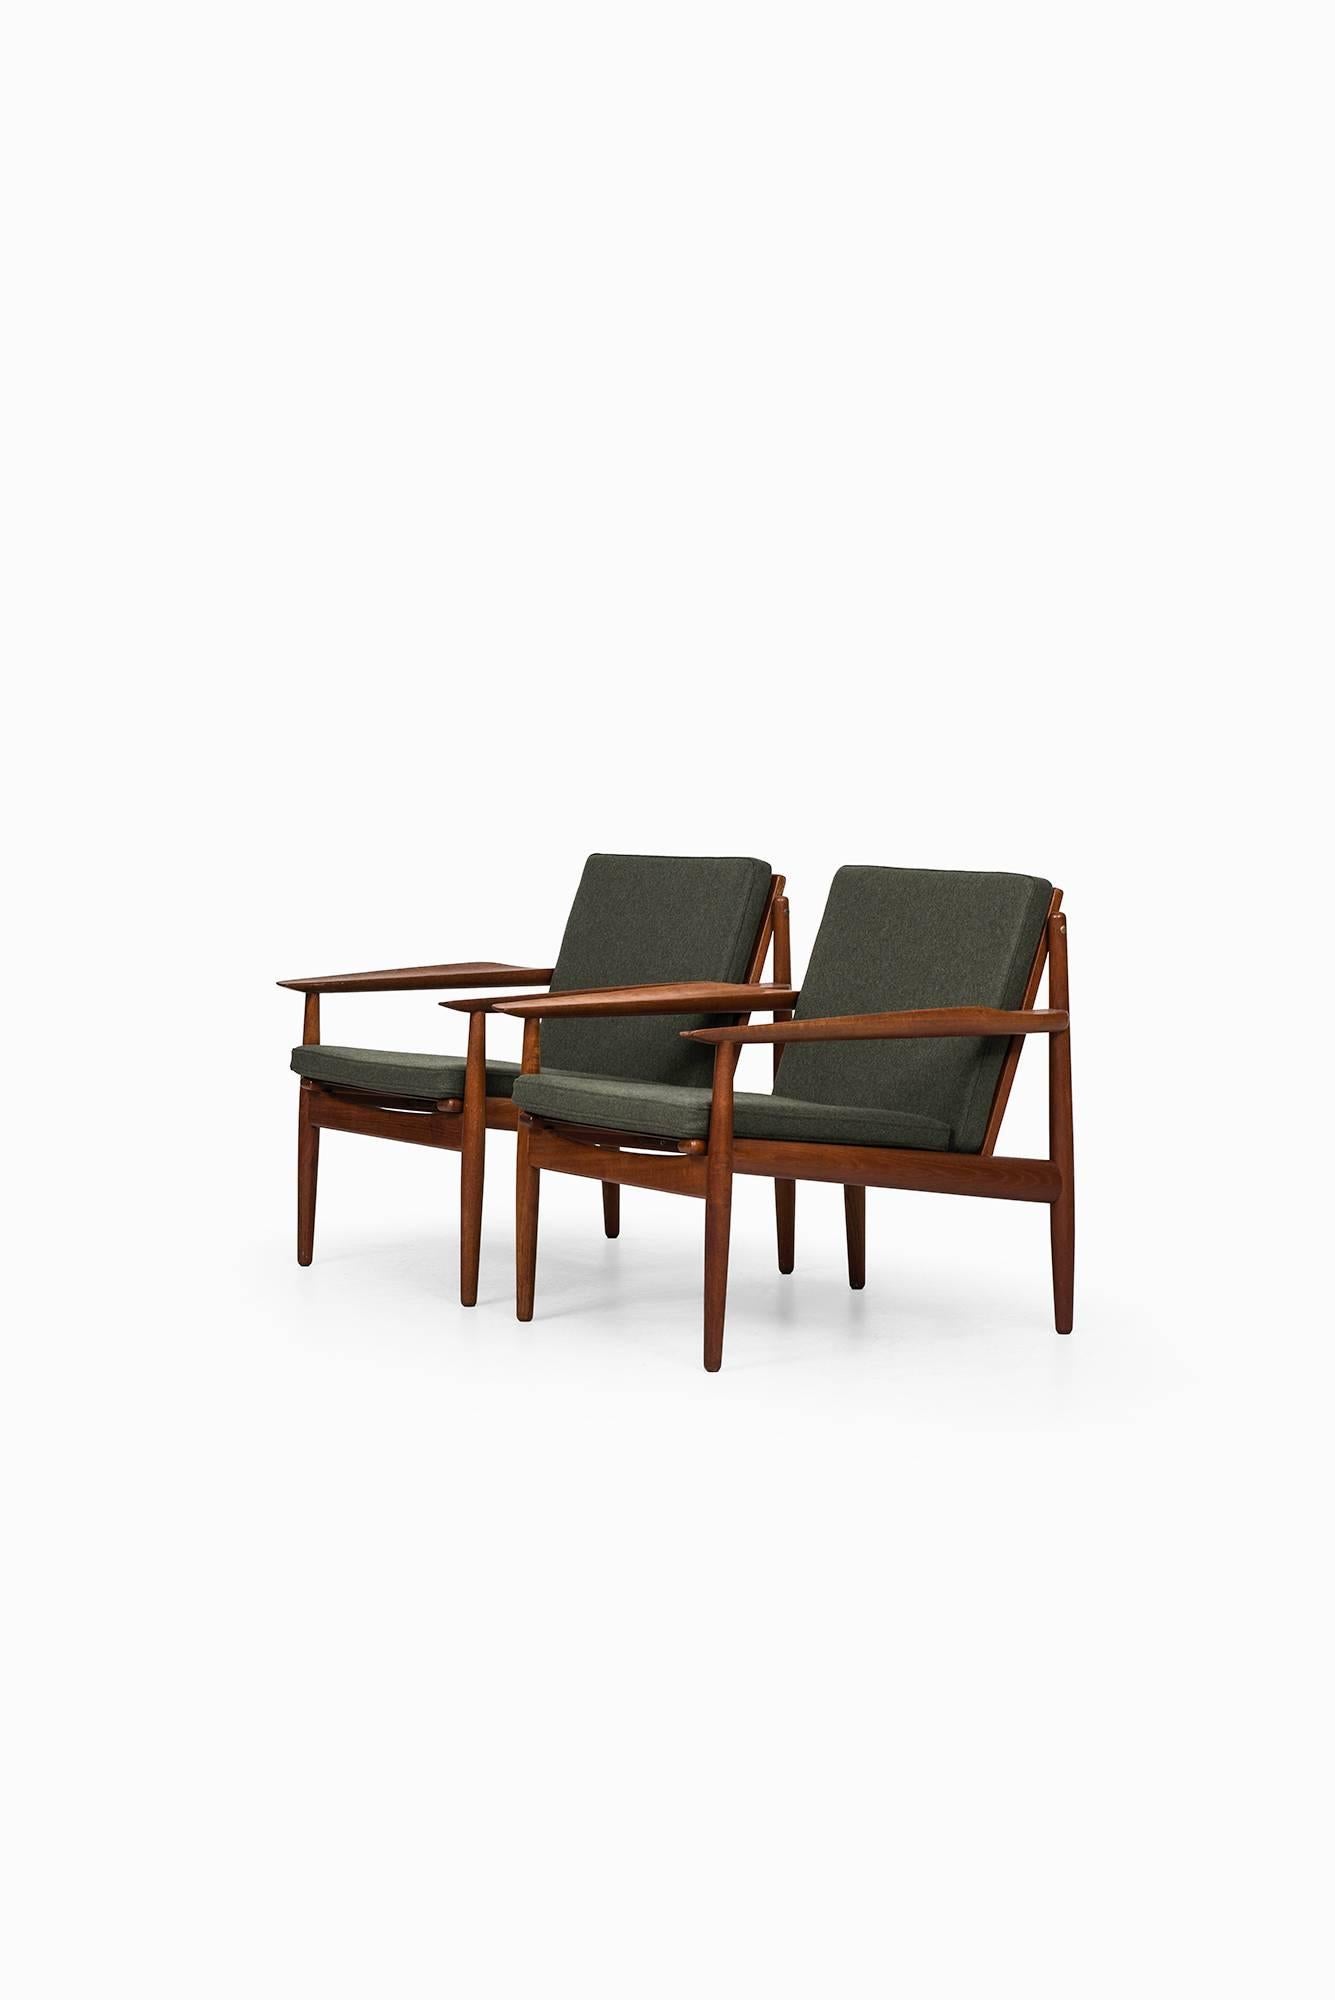 Scandinavian Modern Arne Vodder Easy Chairs Produced by Glostrup Møbelfabrik in Denmark